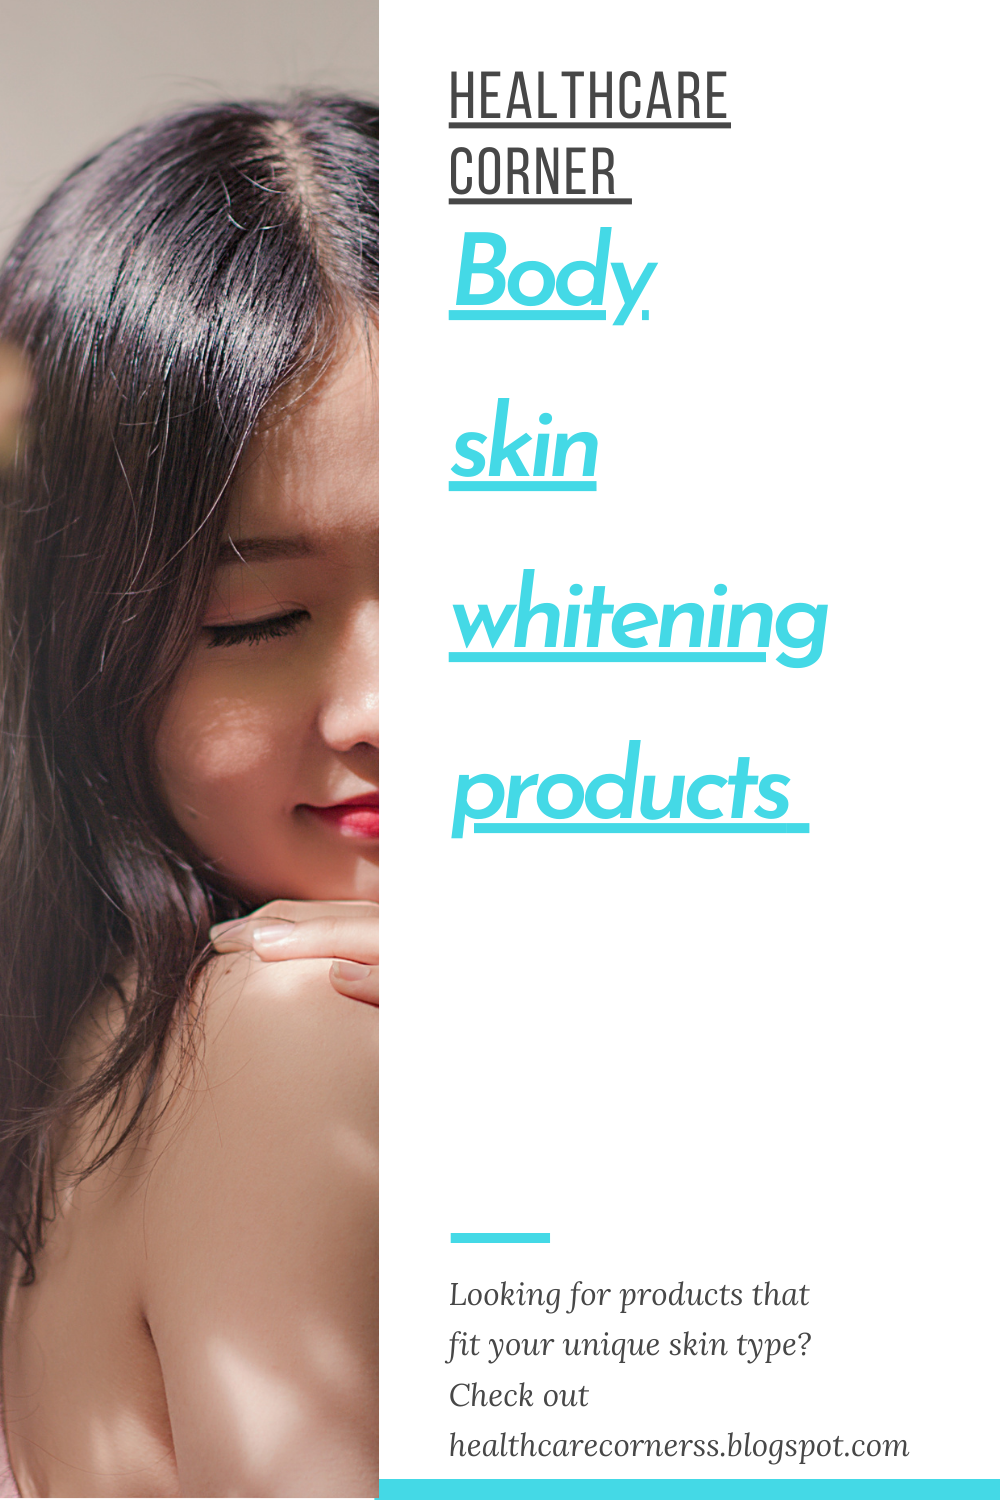 Body skin whitening products